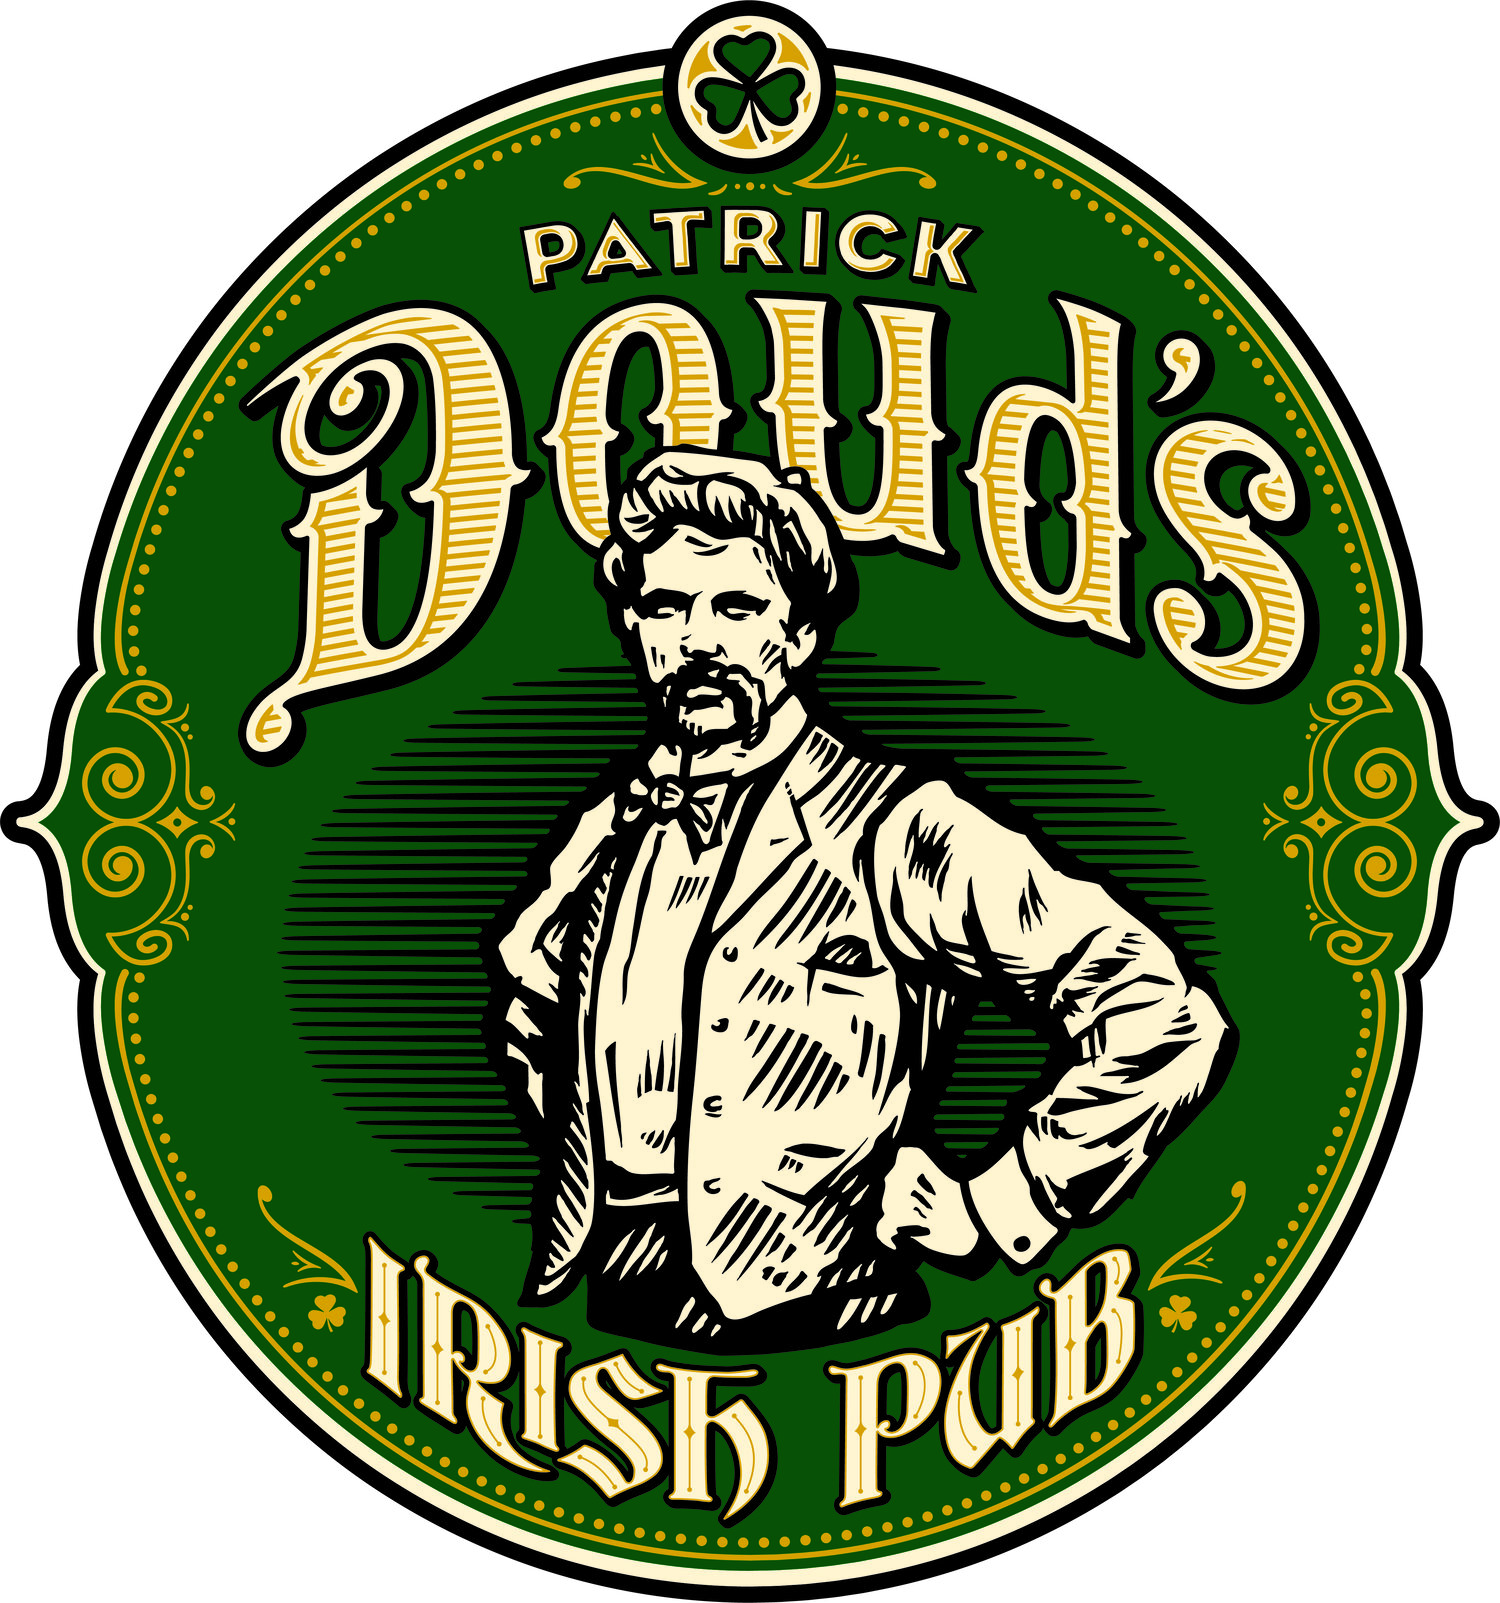 Patrick Doud&#39;s Irish Pub